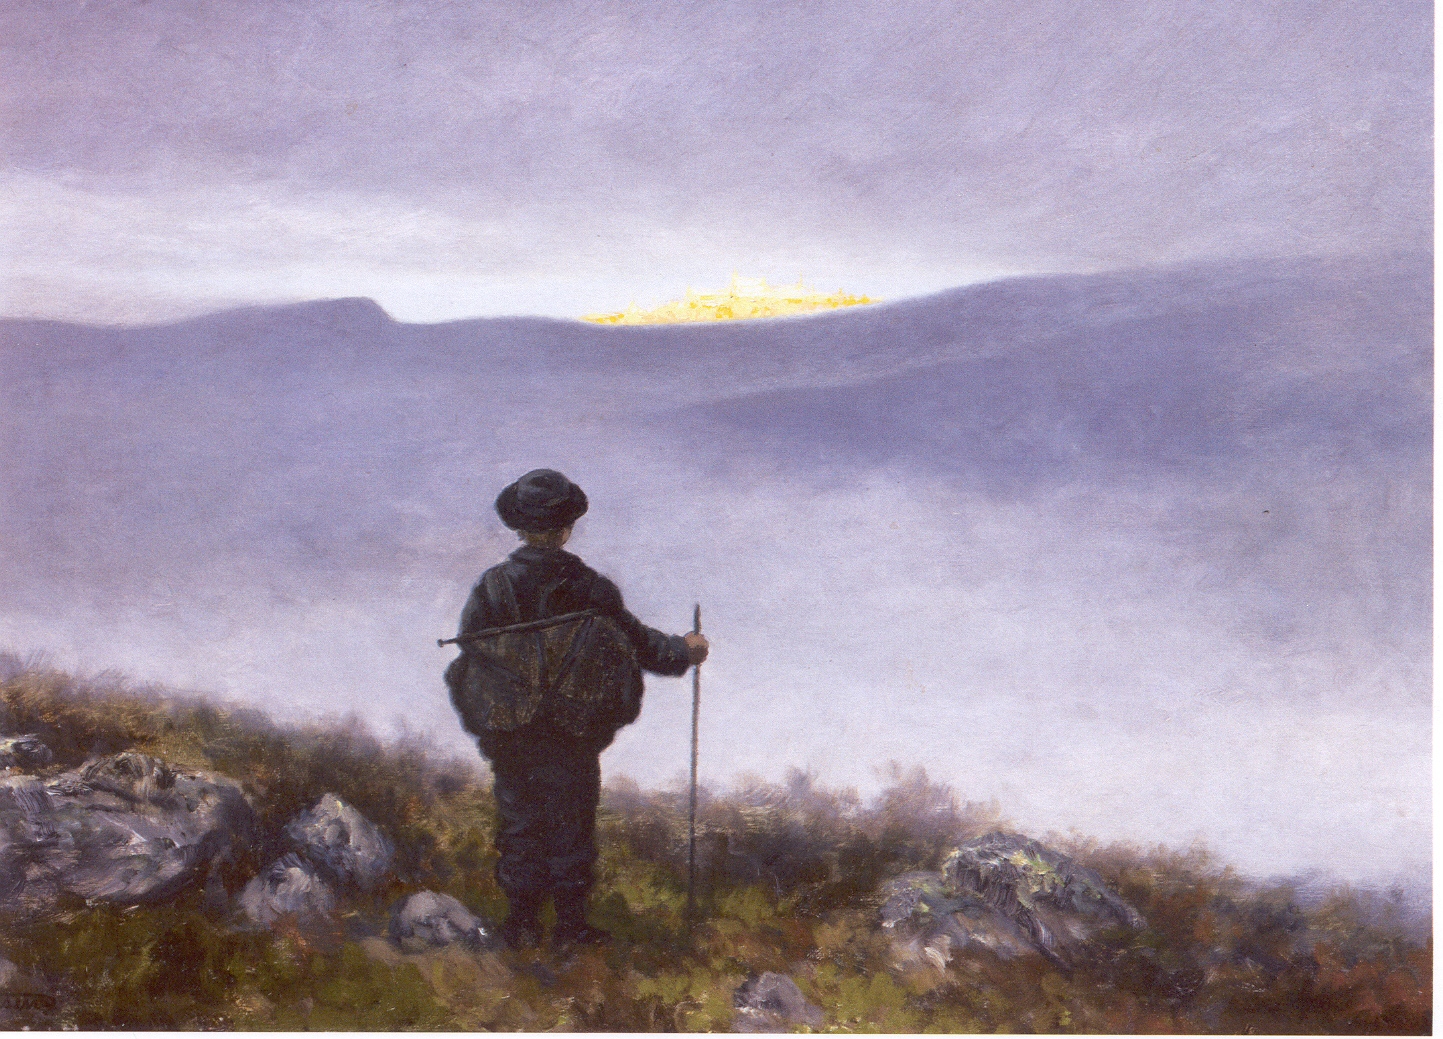 Theodor Kittelsen's painting Soria Moria